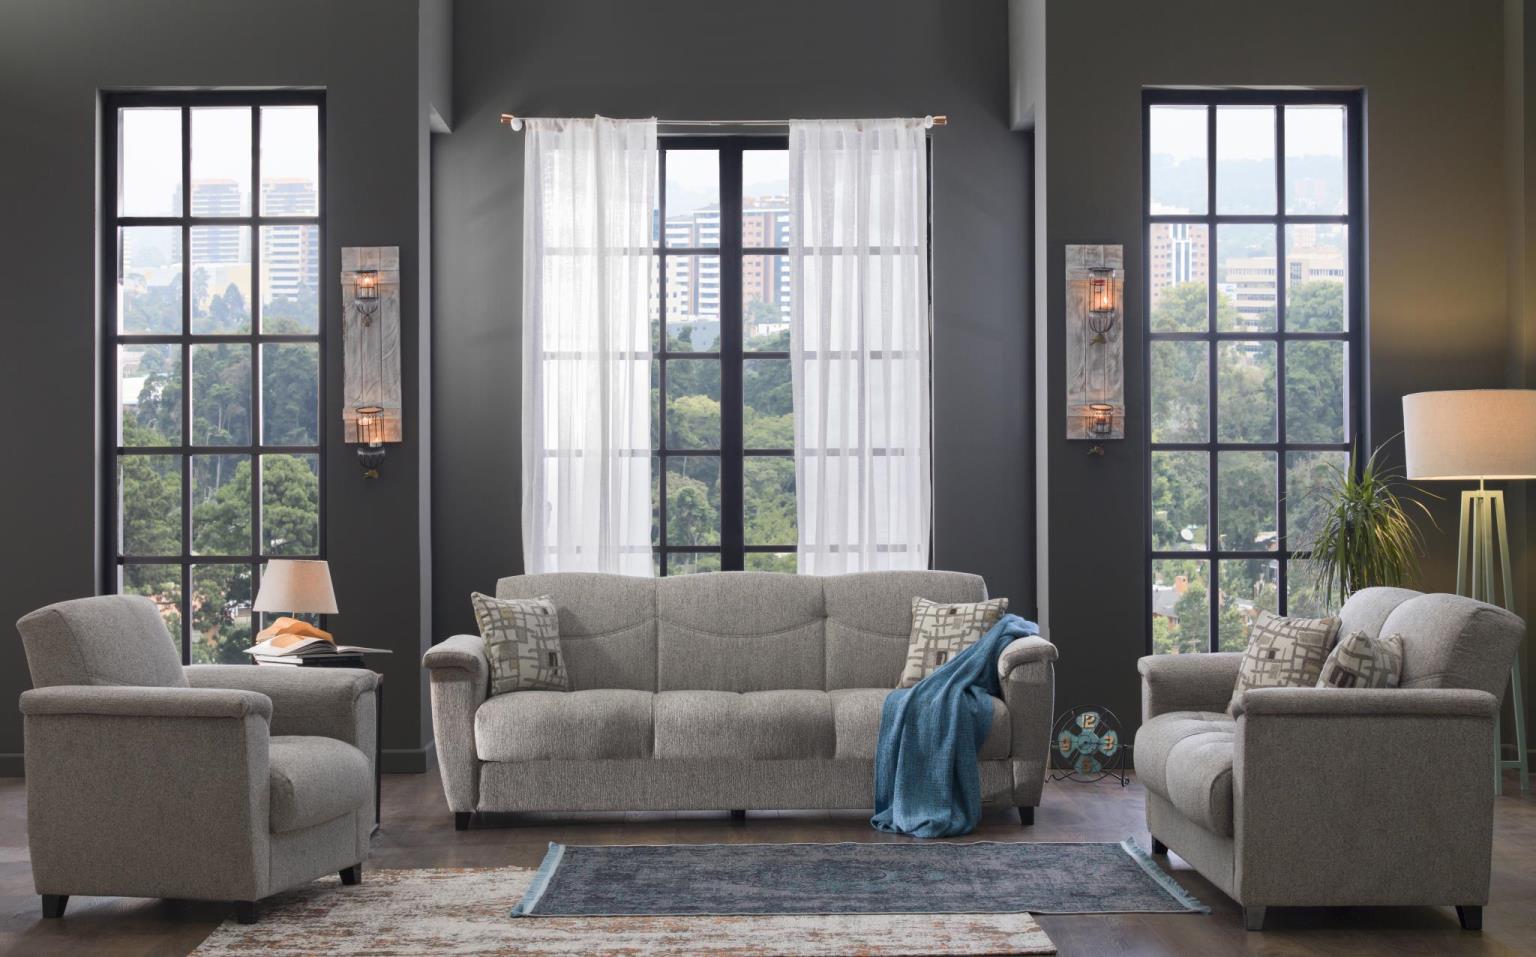 Aspen Set (Sofa & Loveseat & Chair) - Home Store Furniture